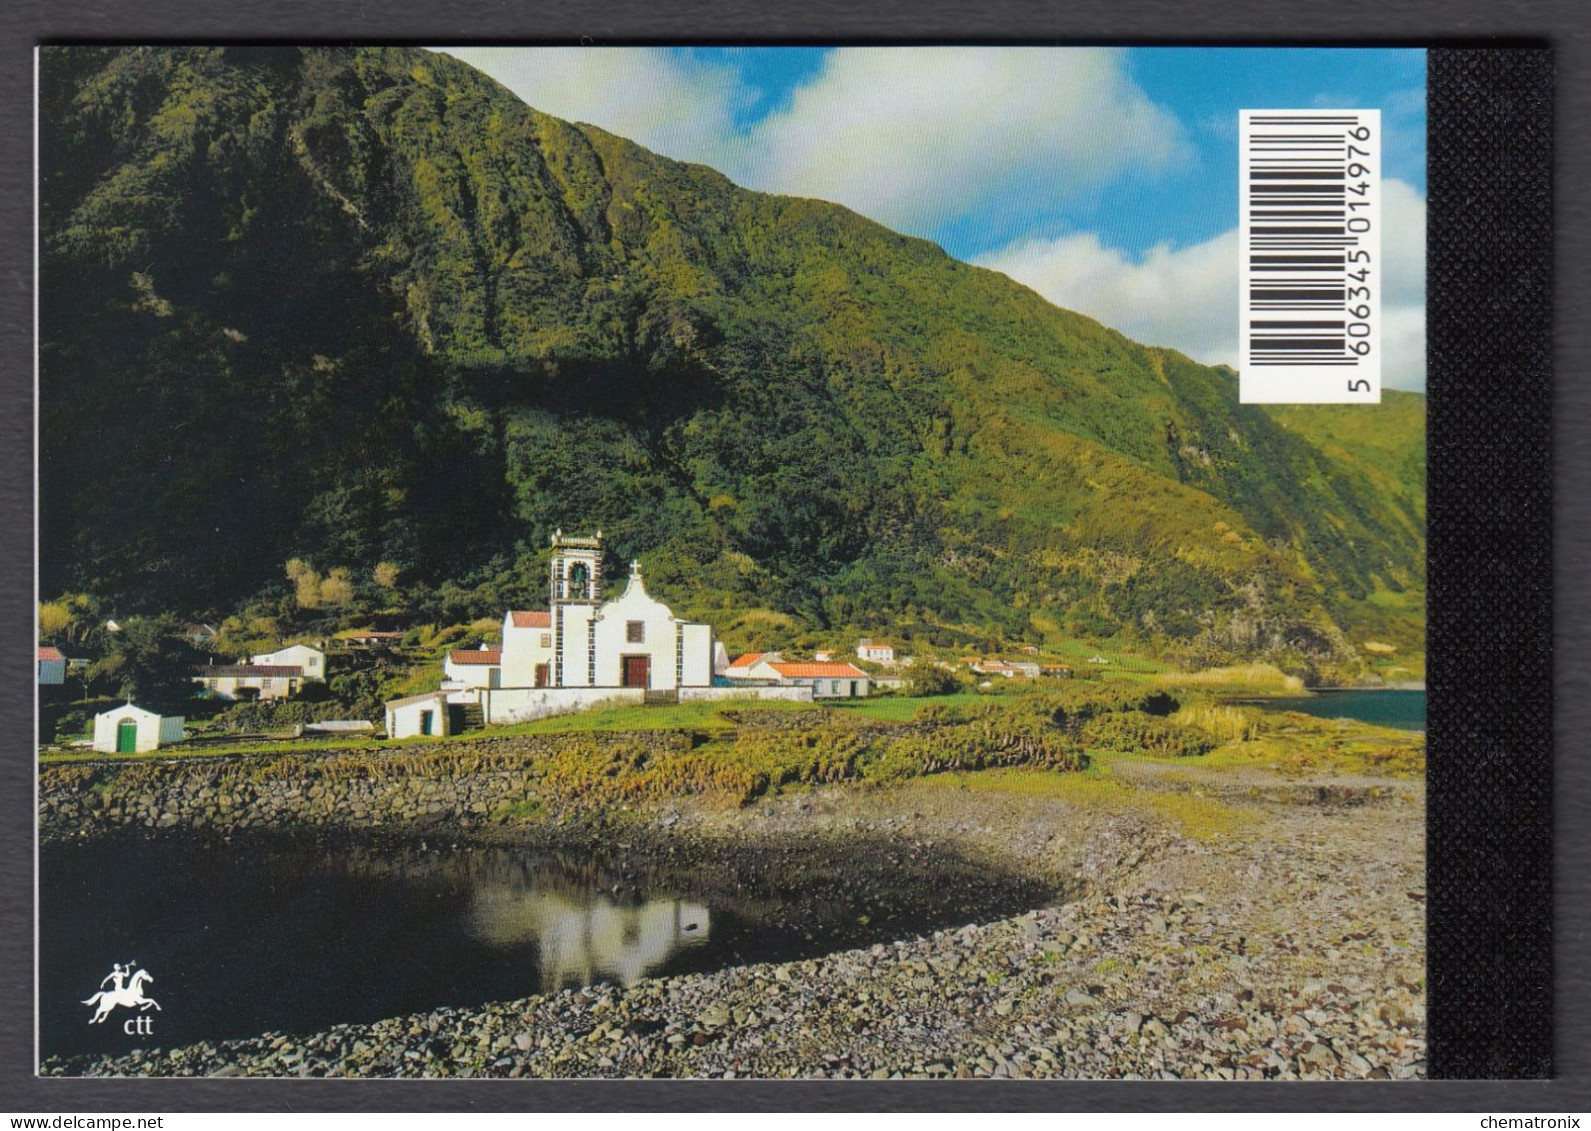 Portugal (Açores) 2012 - Carnet Prestigio - MNH ** - Booklets